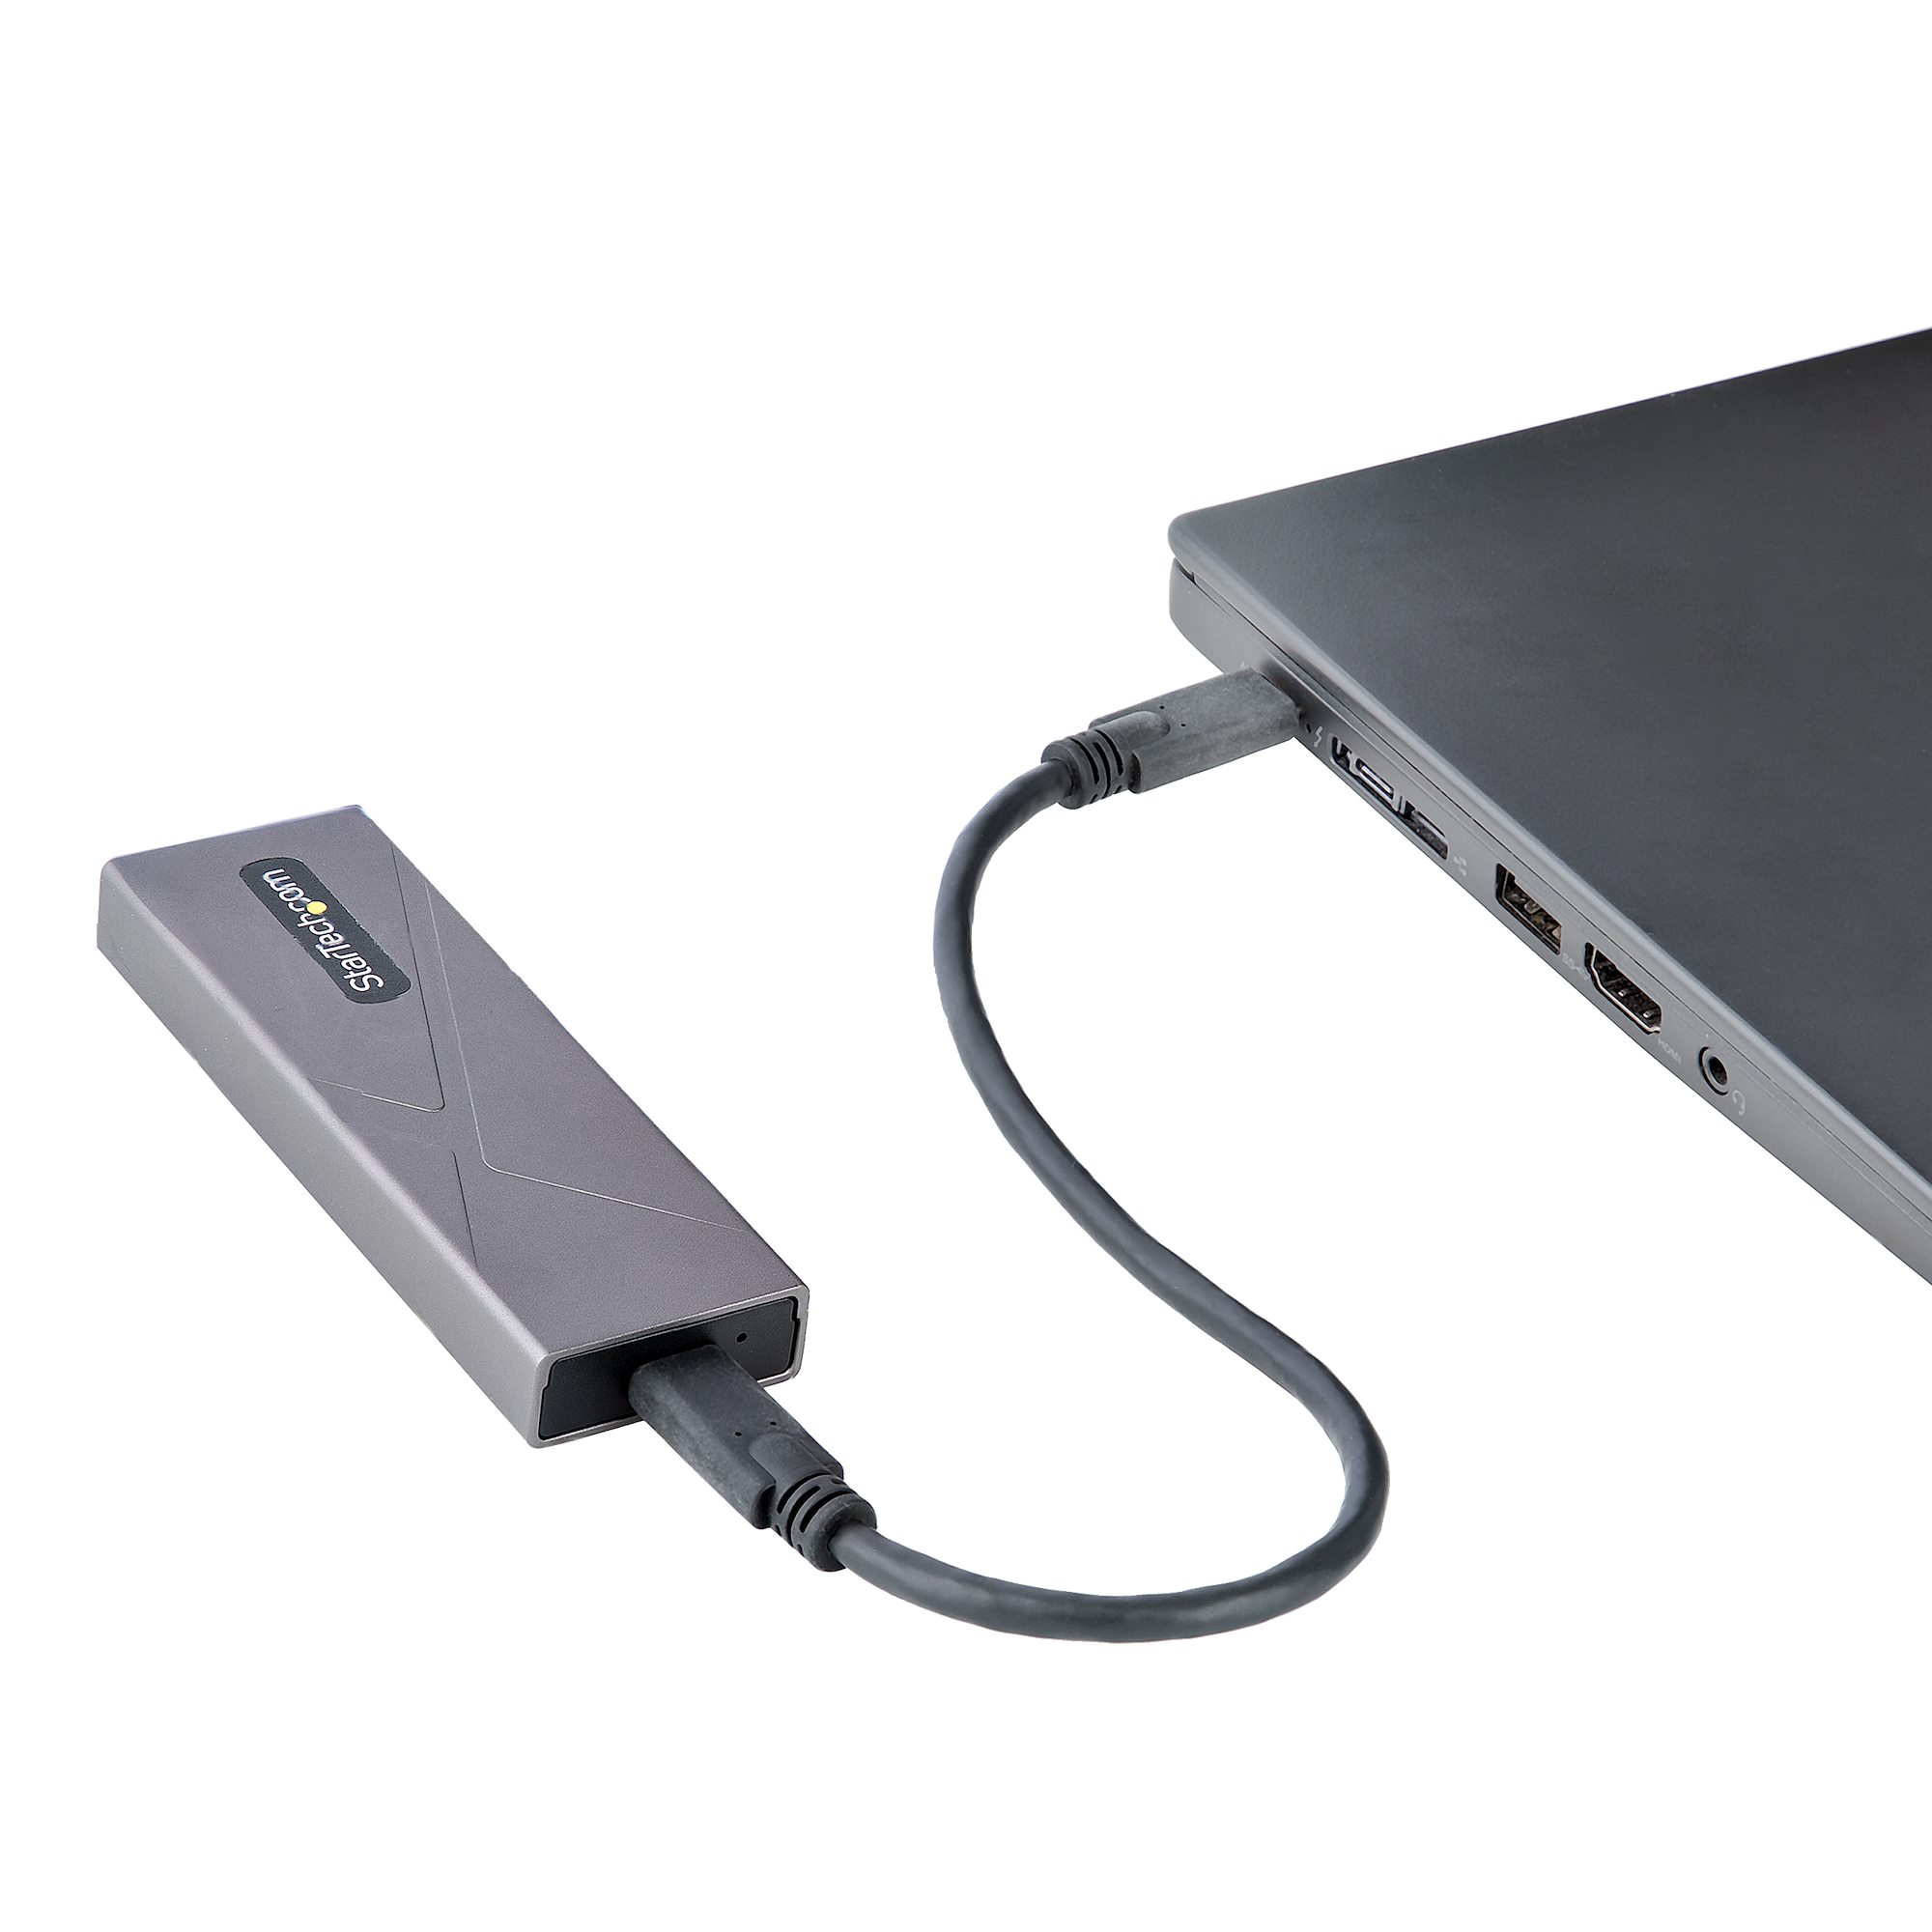 M.2 PCIe NVMe/M.2 SATA SSD USB Enclosure - External Drive